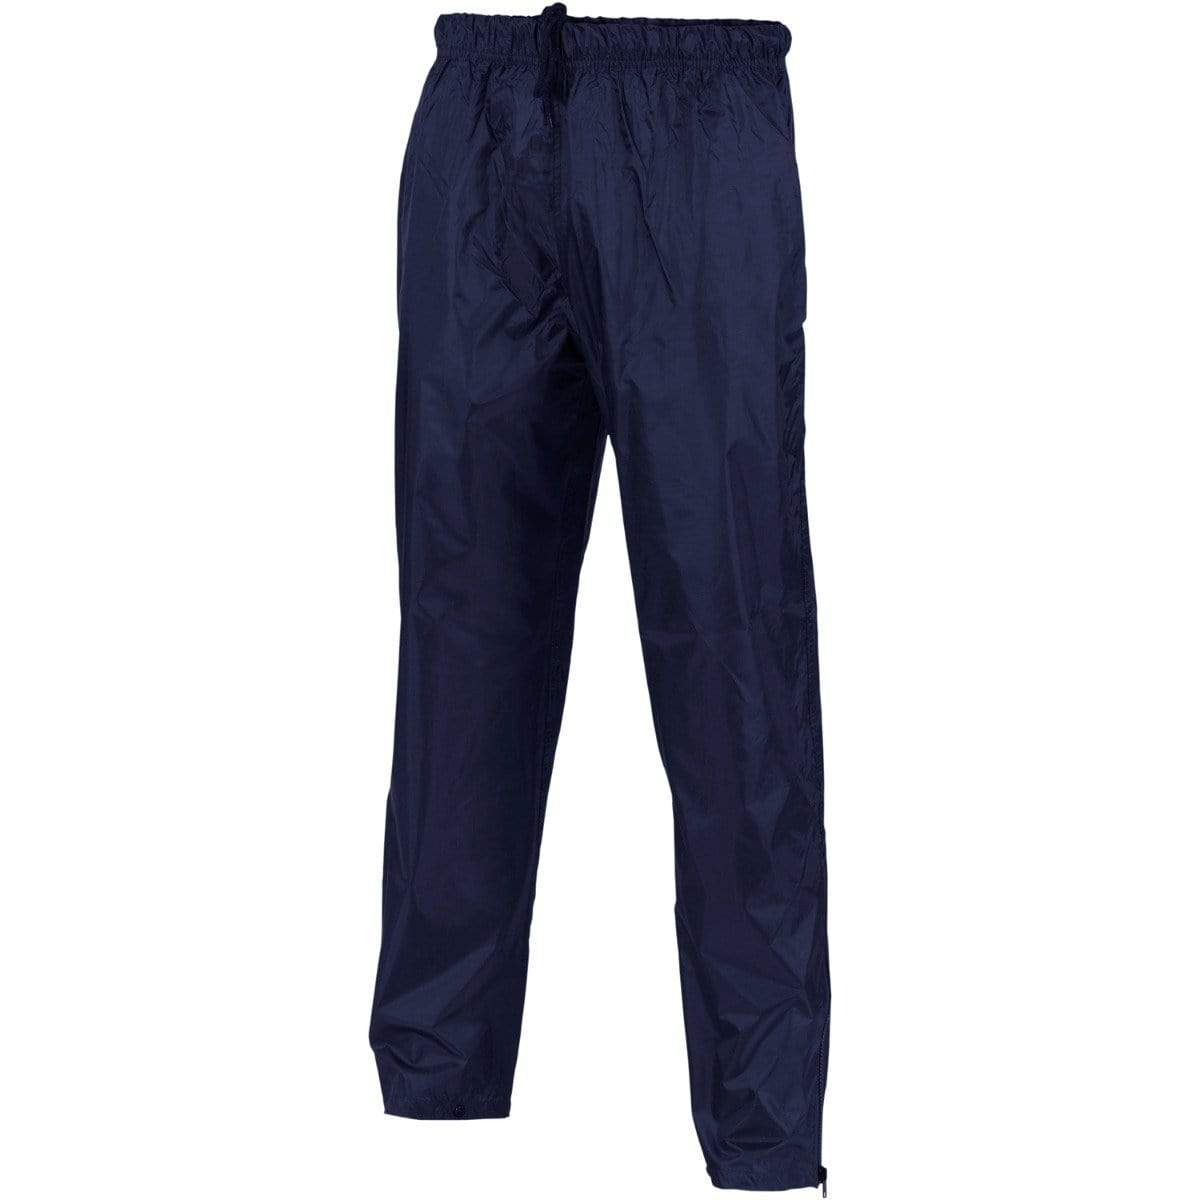 Dnc Workwear Classic Rain Pants - 3707 Work Wear DNC Workwear Navy S 